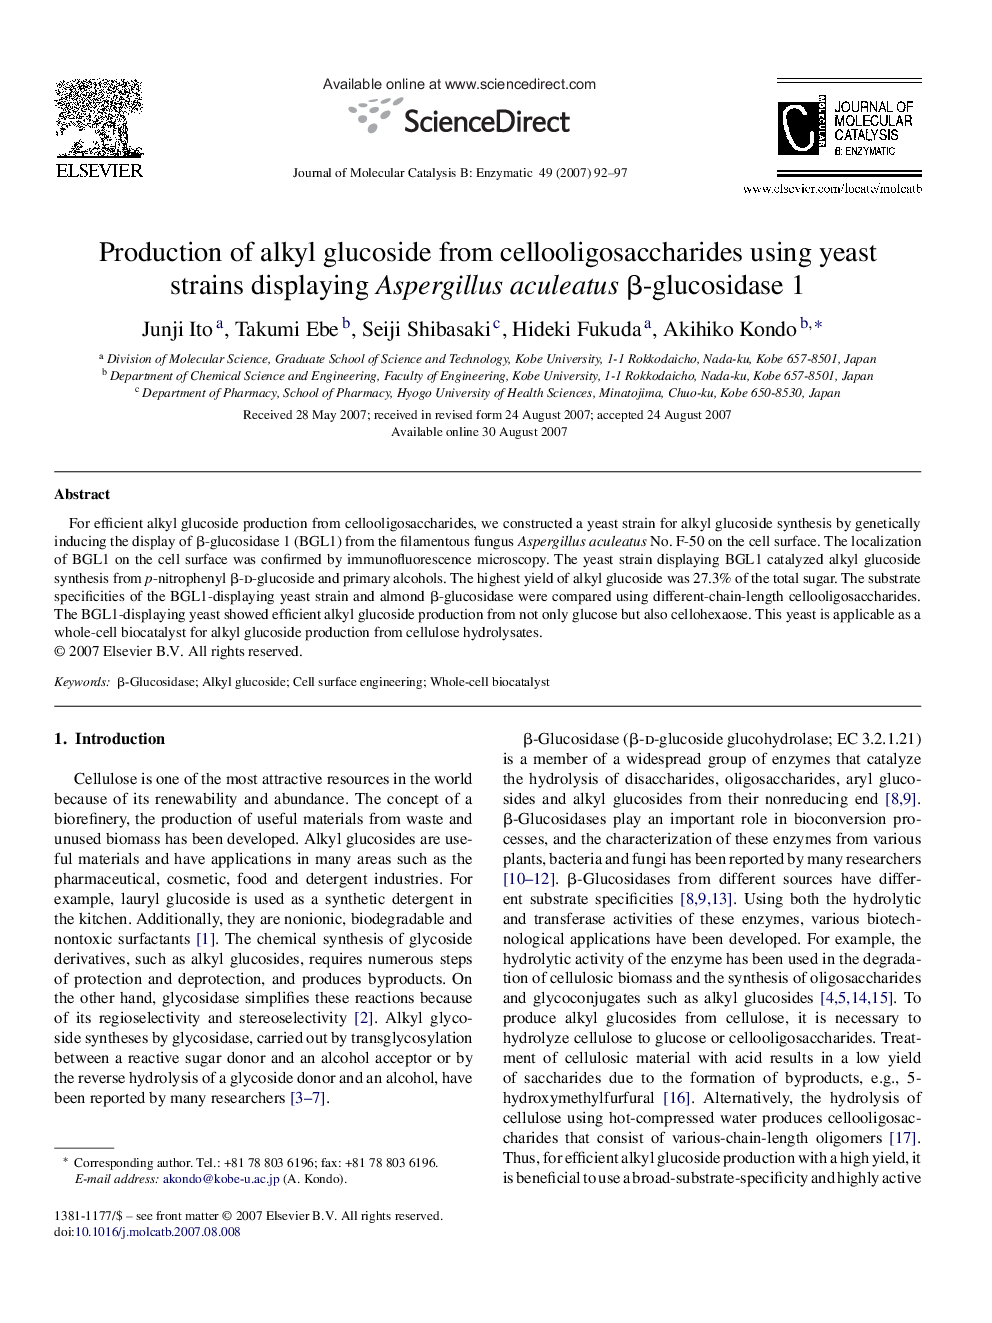 Production of alkyl glucoside from cellooligosaccharides using yeast strains displaying Aspergillus aculeatus β-glucosidase 1